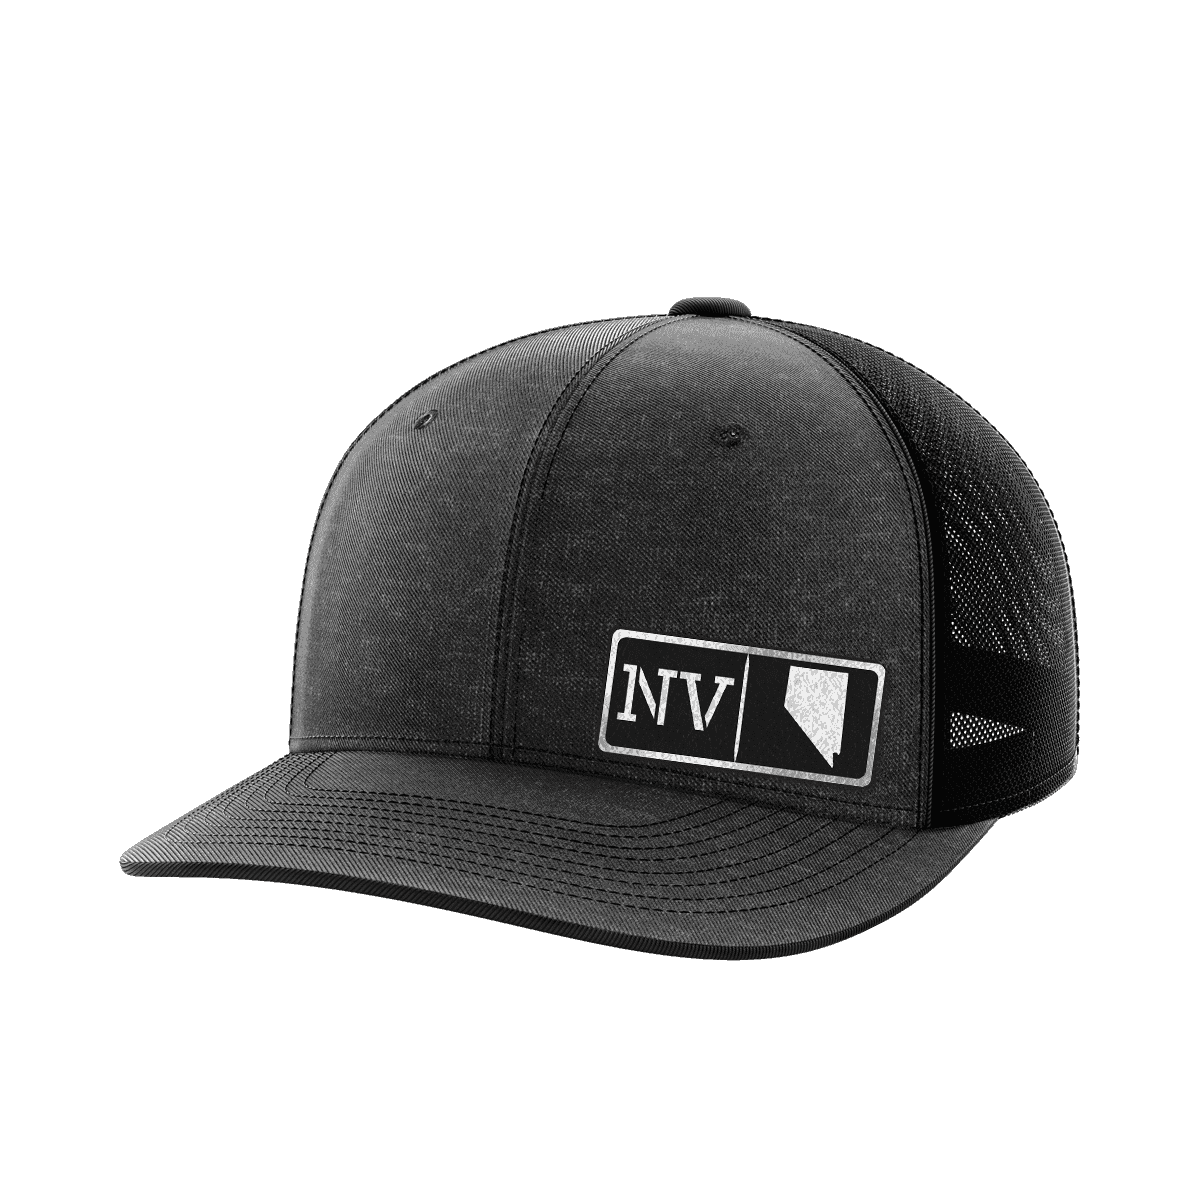 Thumbnail for Nevada Homegrown Hats - Greater Half